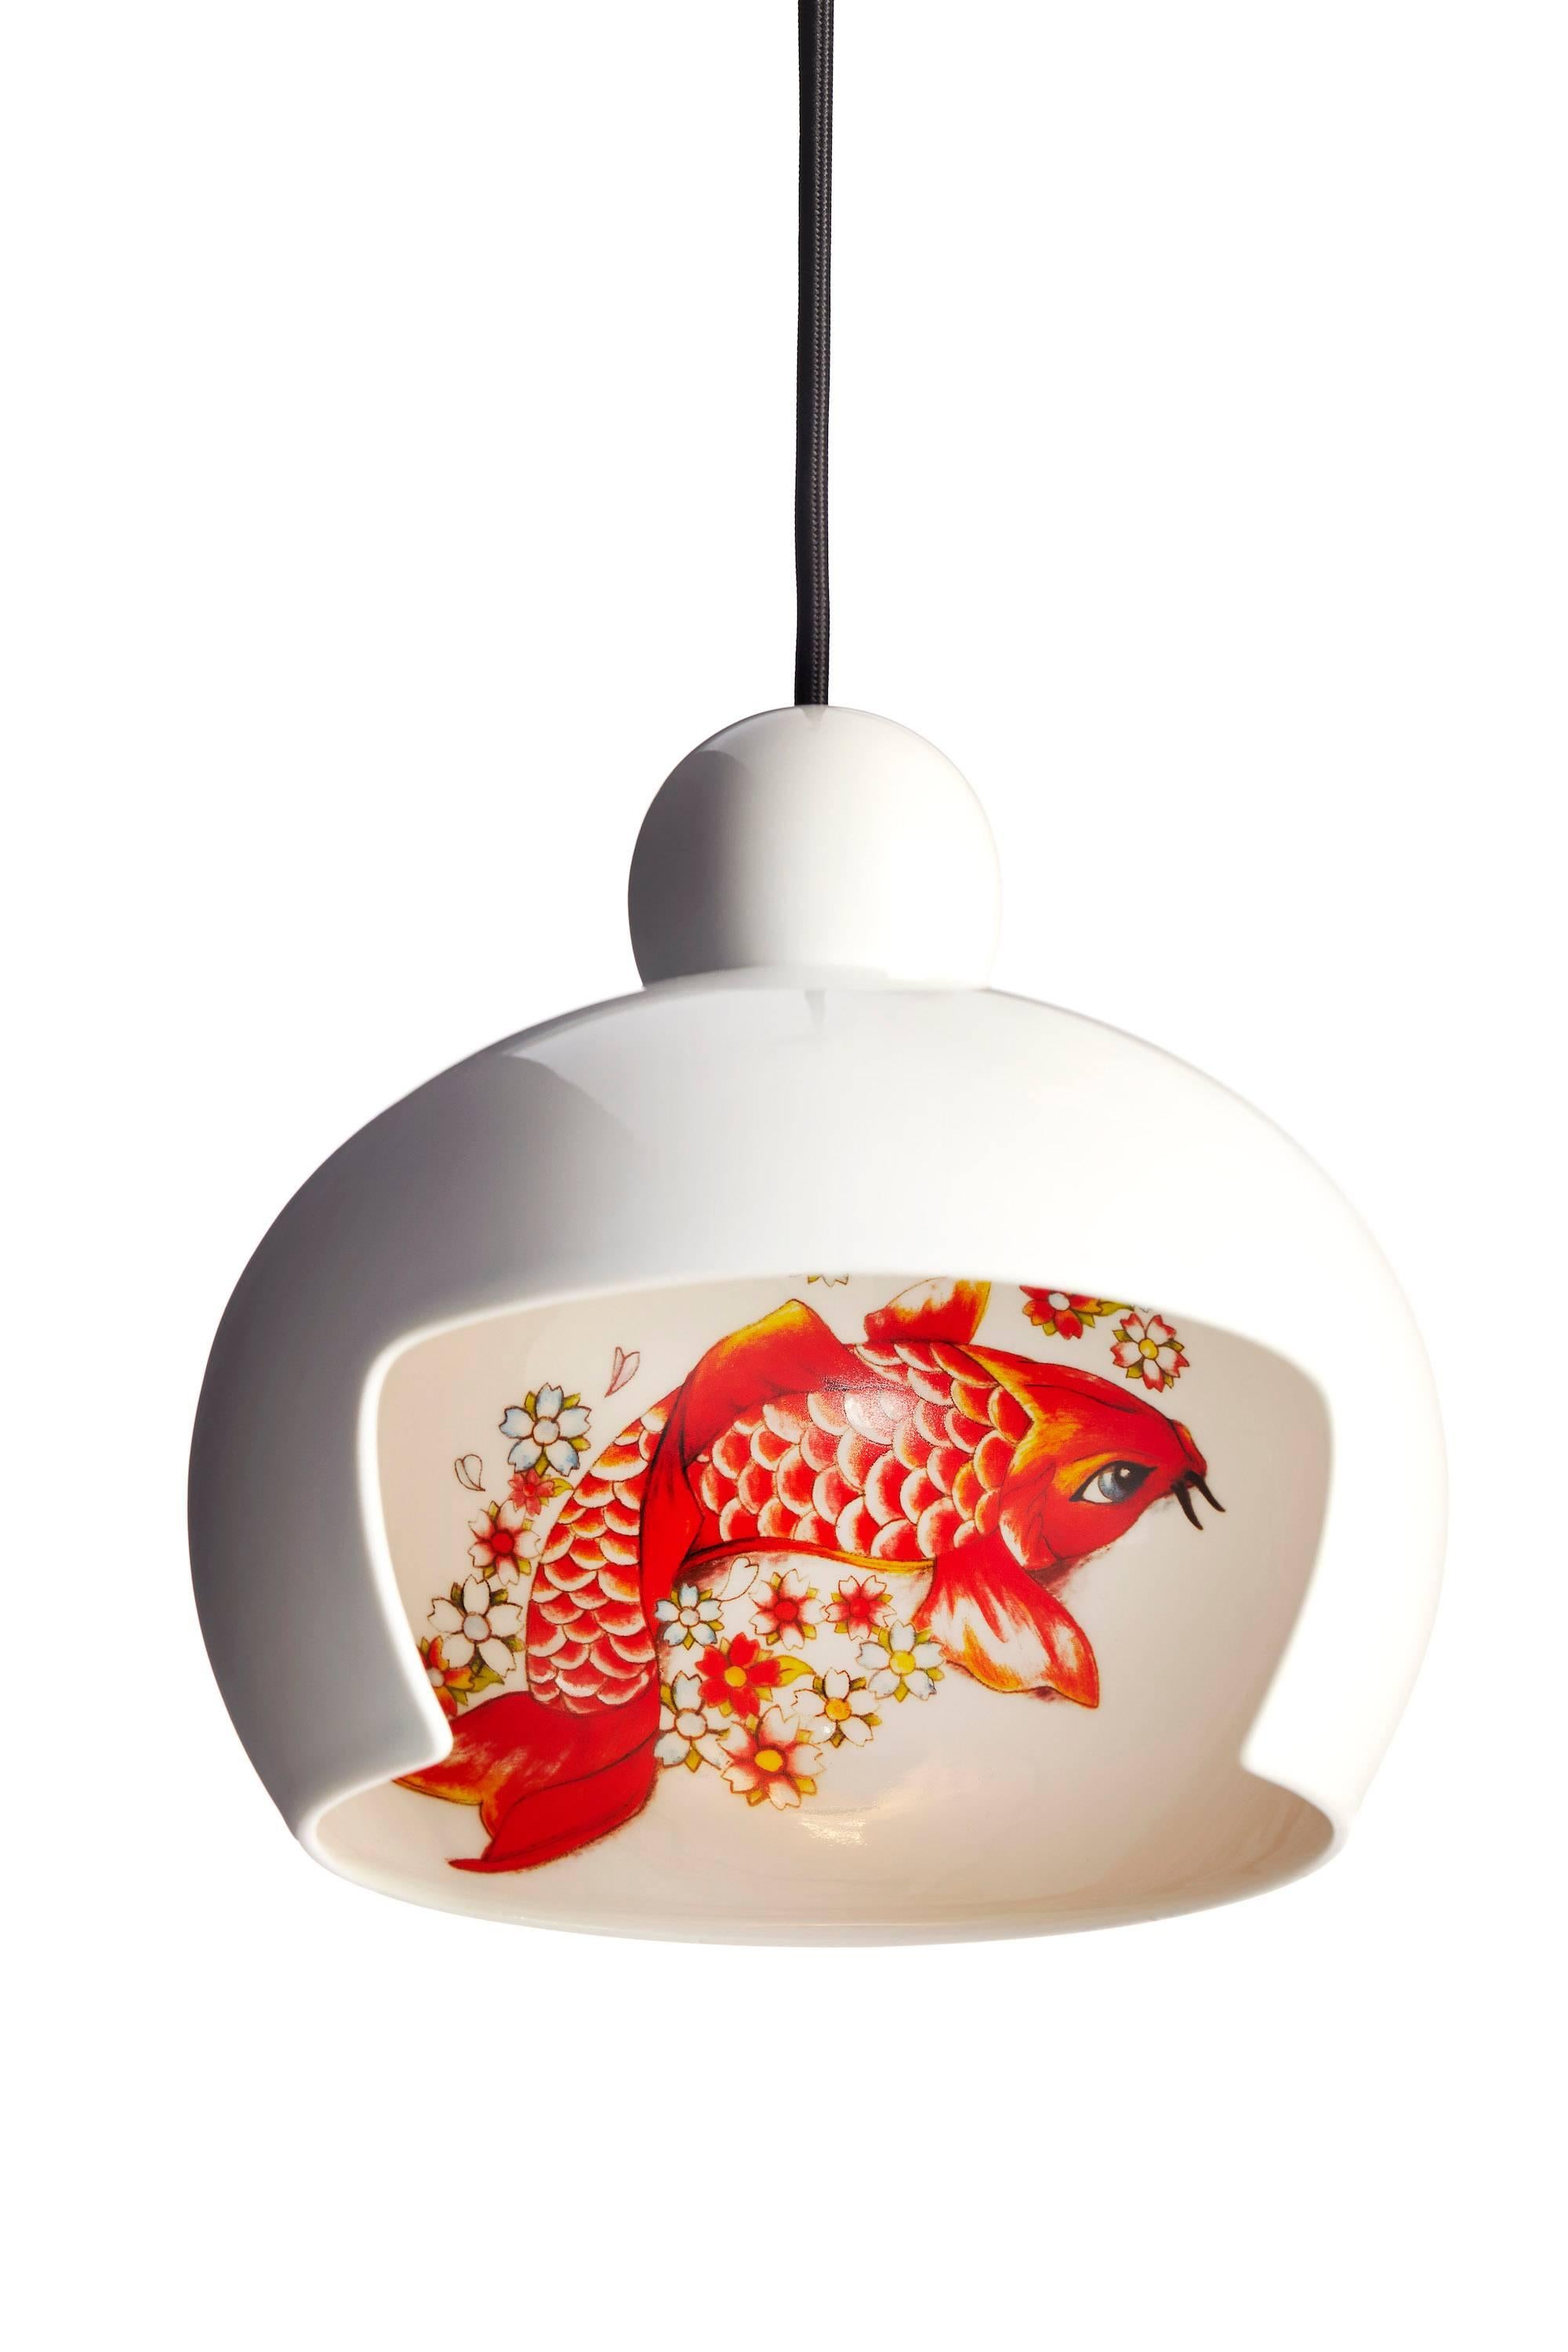 Modern Moooi Juuyo Suspension Lamp by Lorenza Bozzoli with Koi Fish or Peach Flowers